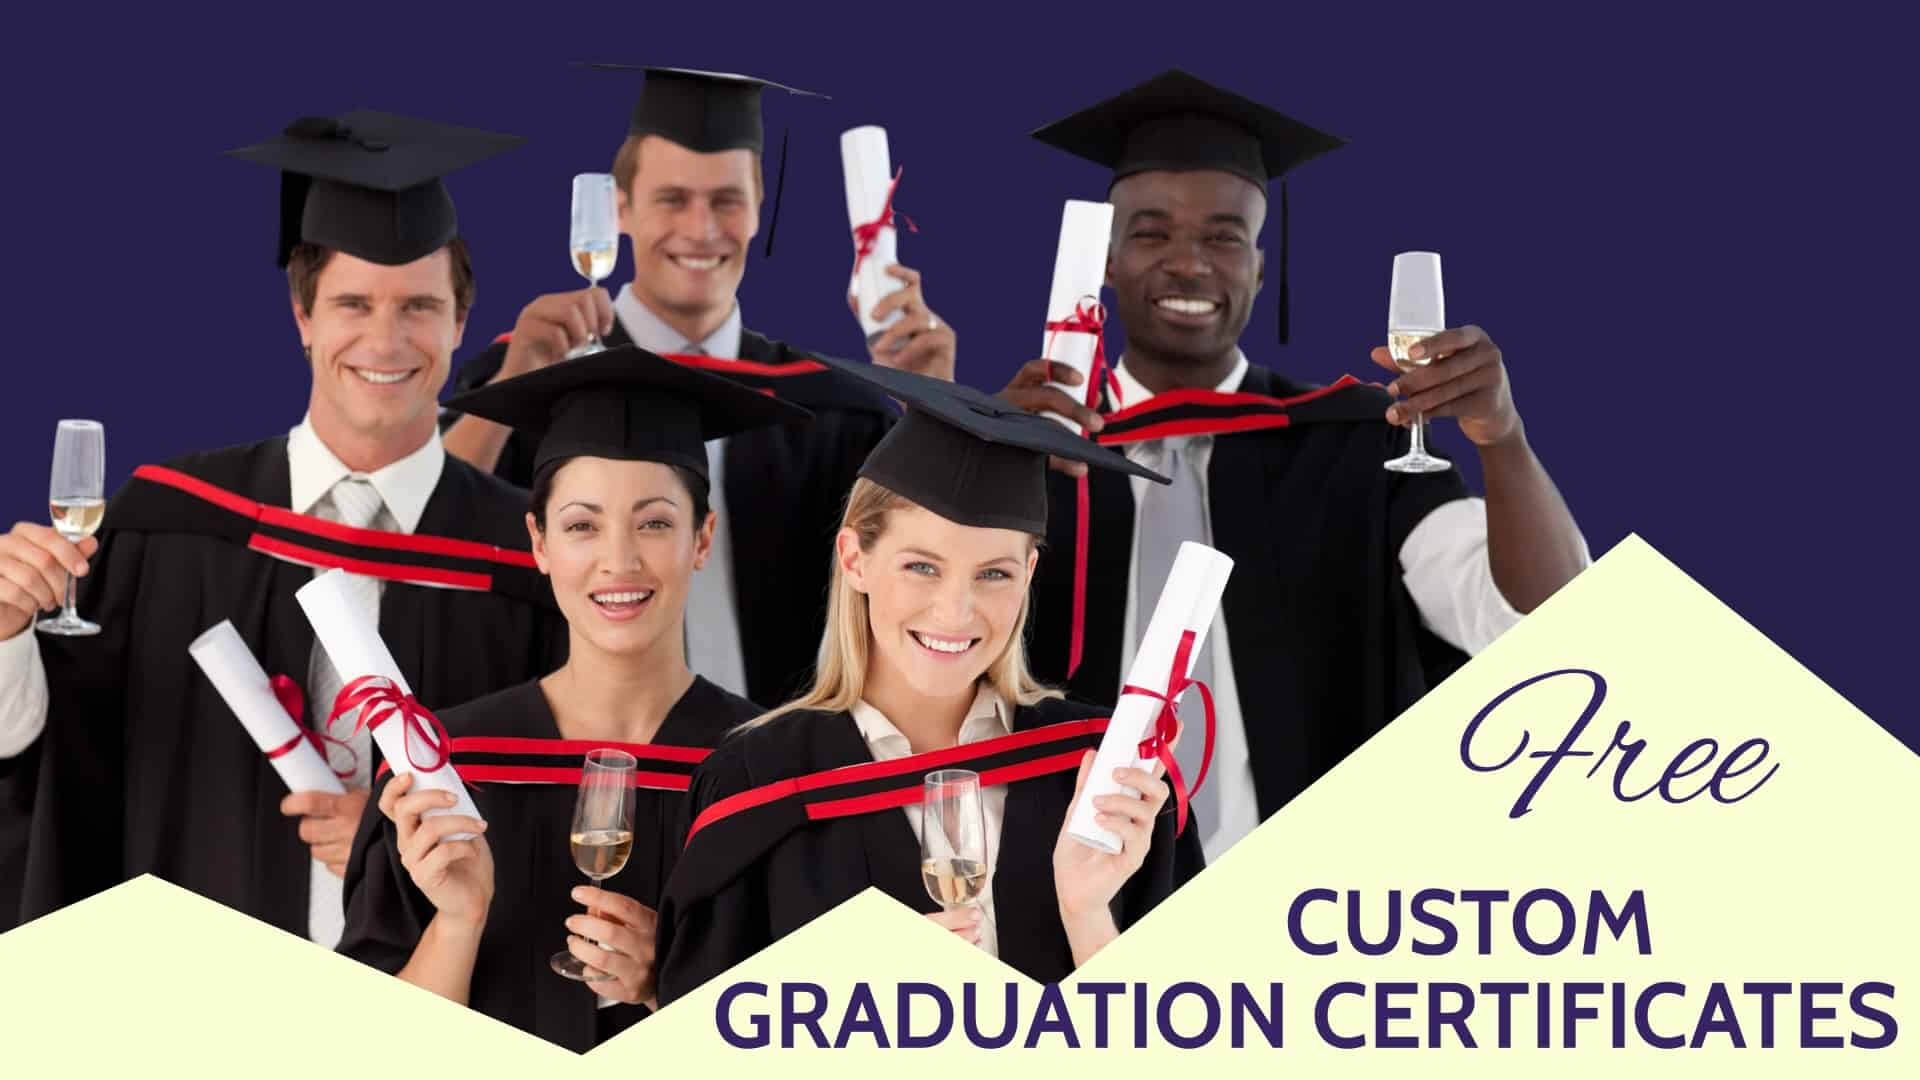 Free Graduation Certificate Templates | Customize Online With Free Printable Graduation Certificate Templates